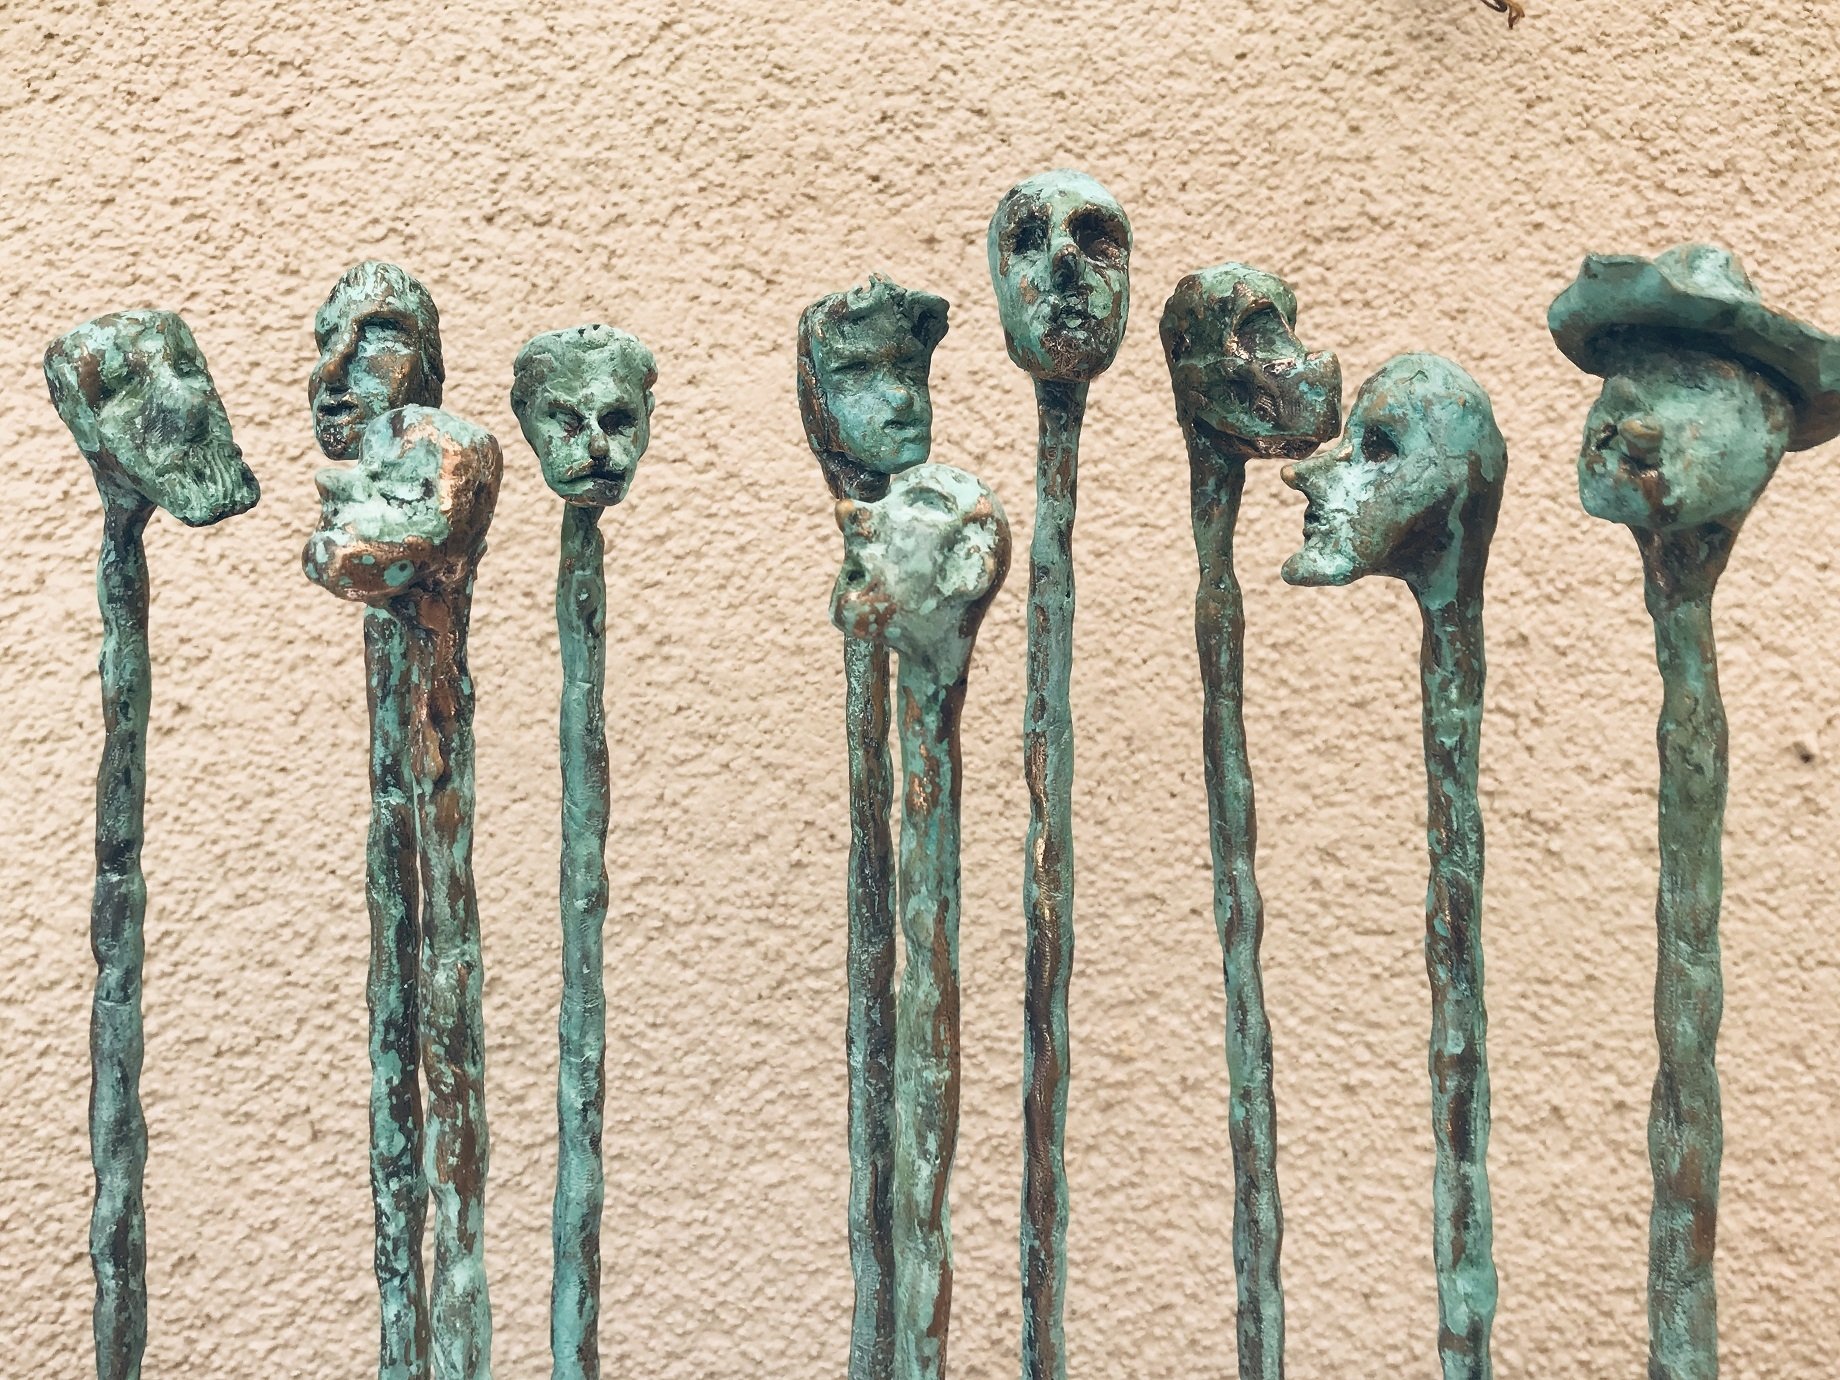 Özge Günaydın, 'Sameness,' bronze founding, 10 pieces, 32 by 10 centimeters, 2020. (Courtesy of Art for Goodness Association)